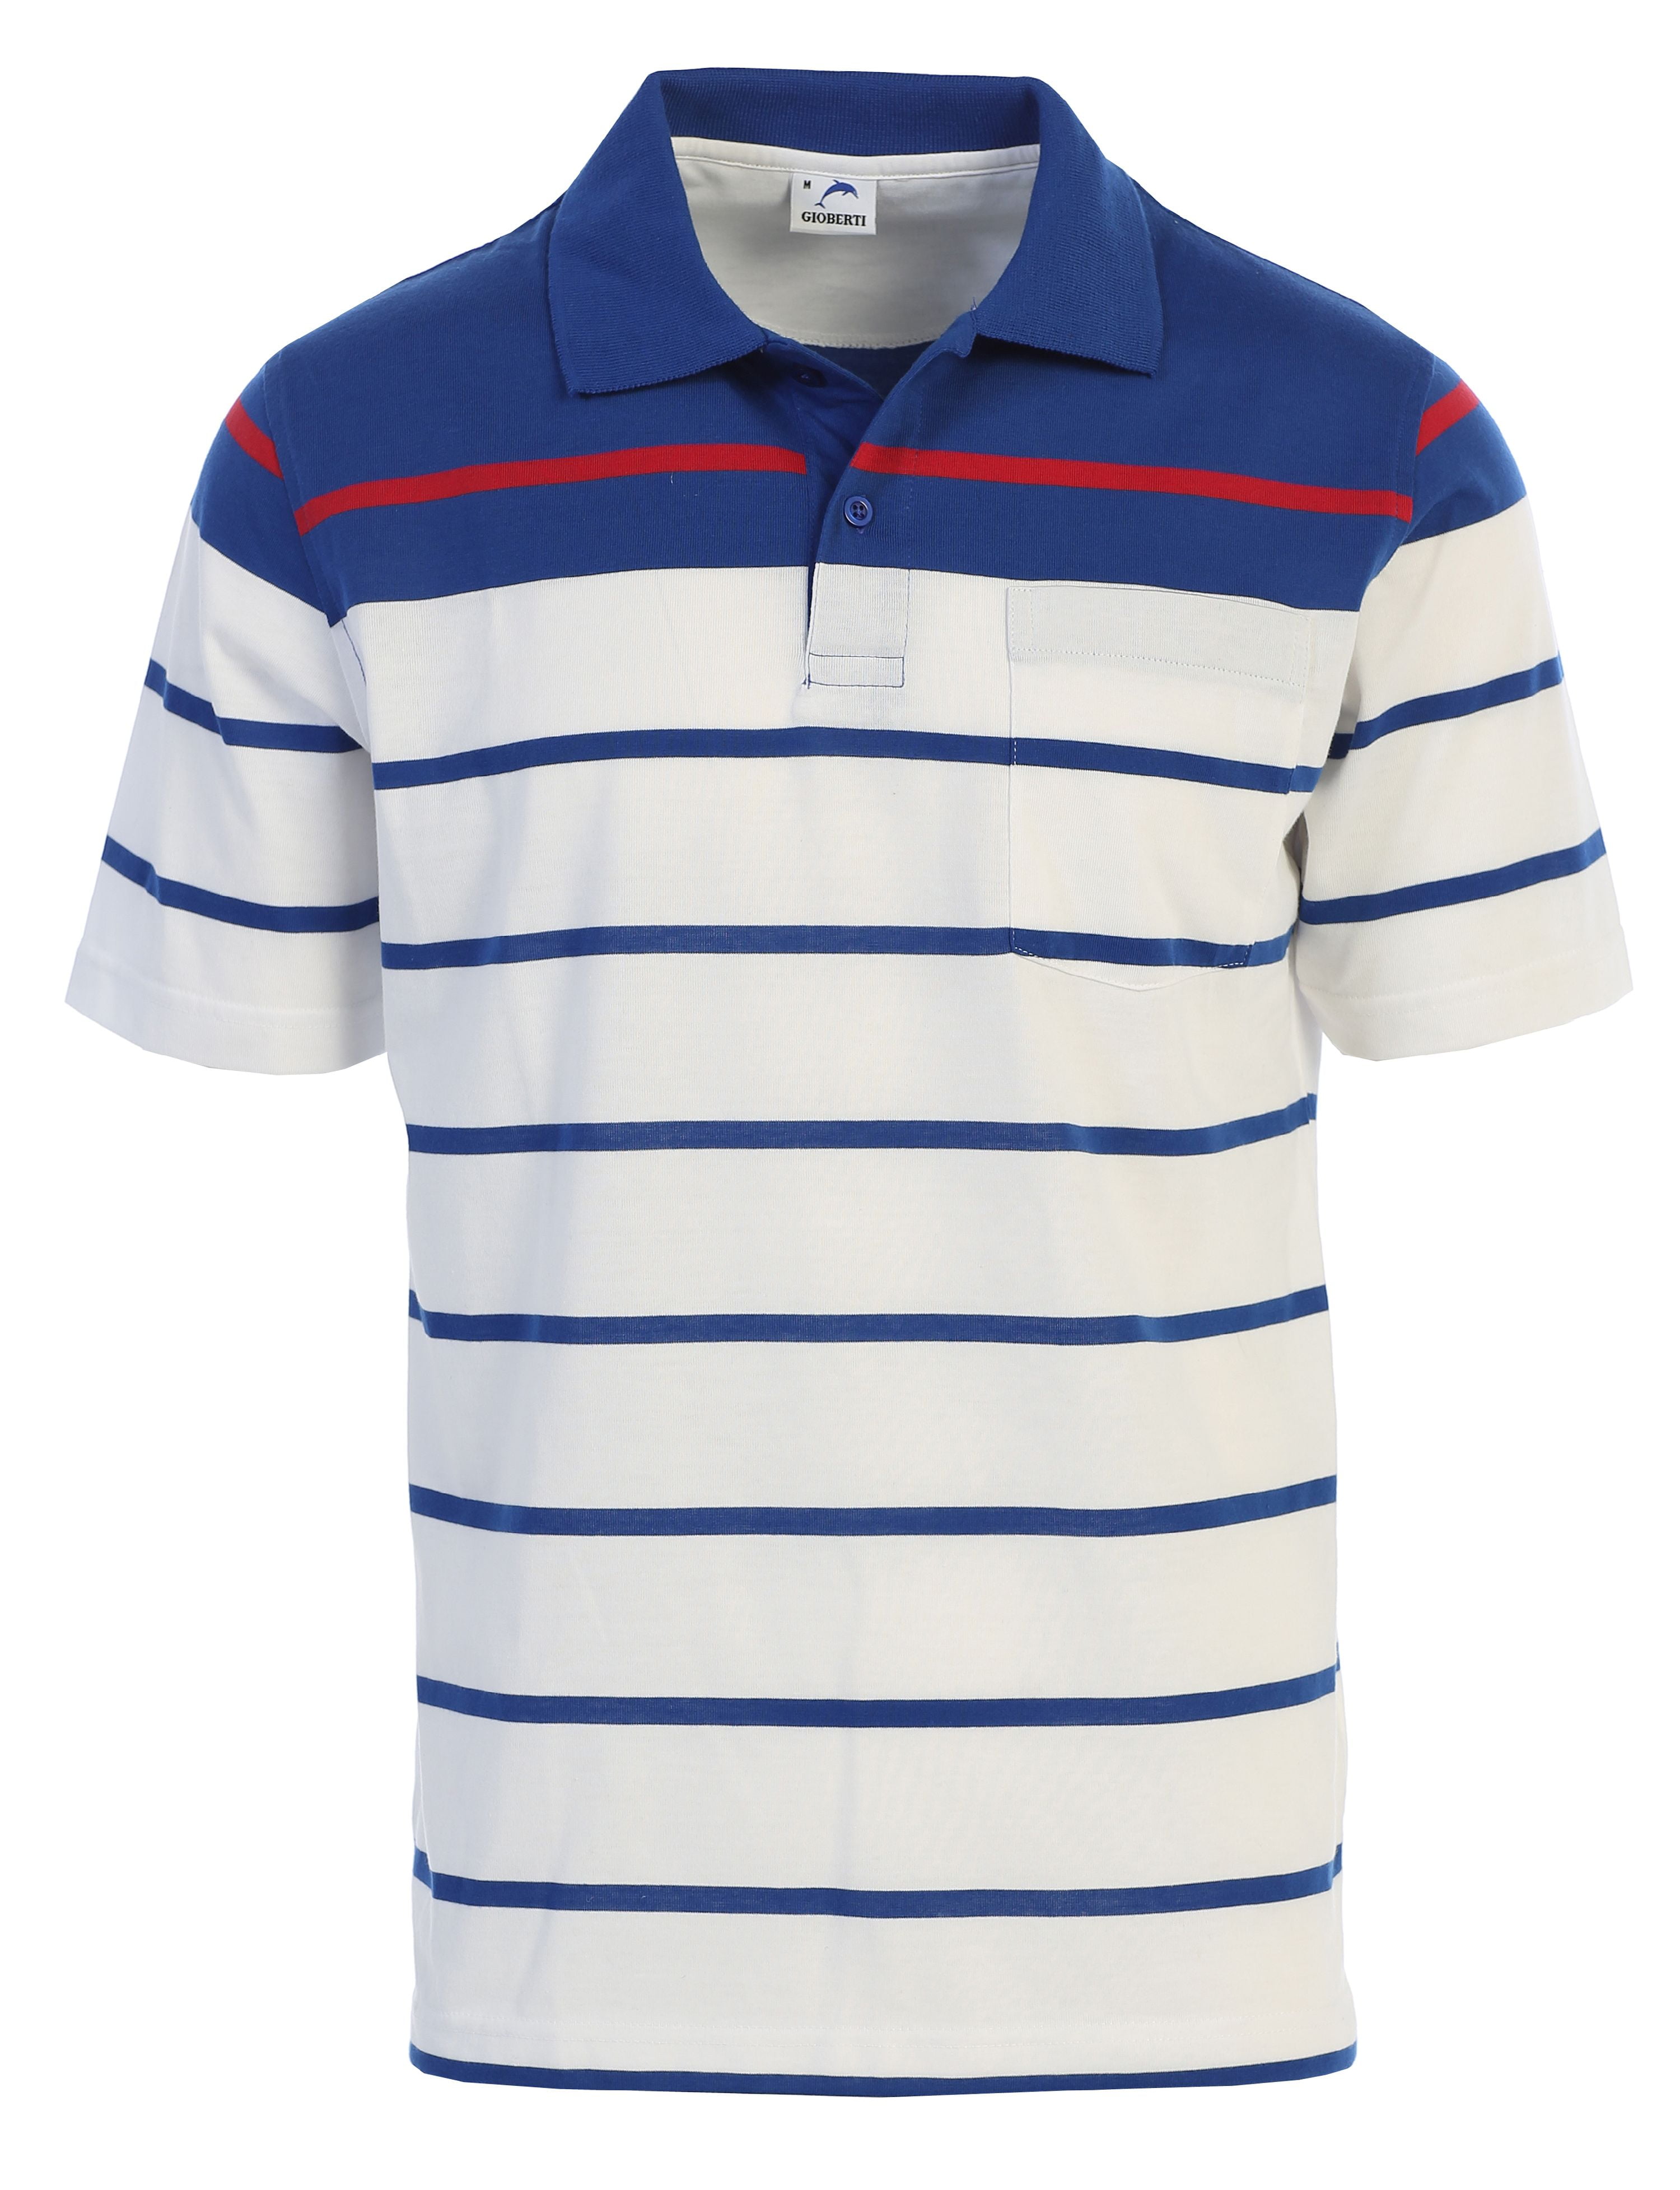 Gioberti Mens Single Stripe Polo Shirt with Pocket - Yarn Dye - Walmart.com